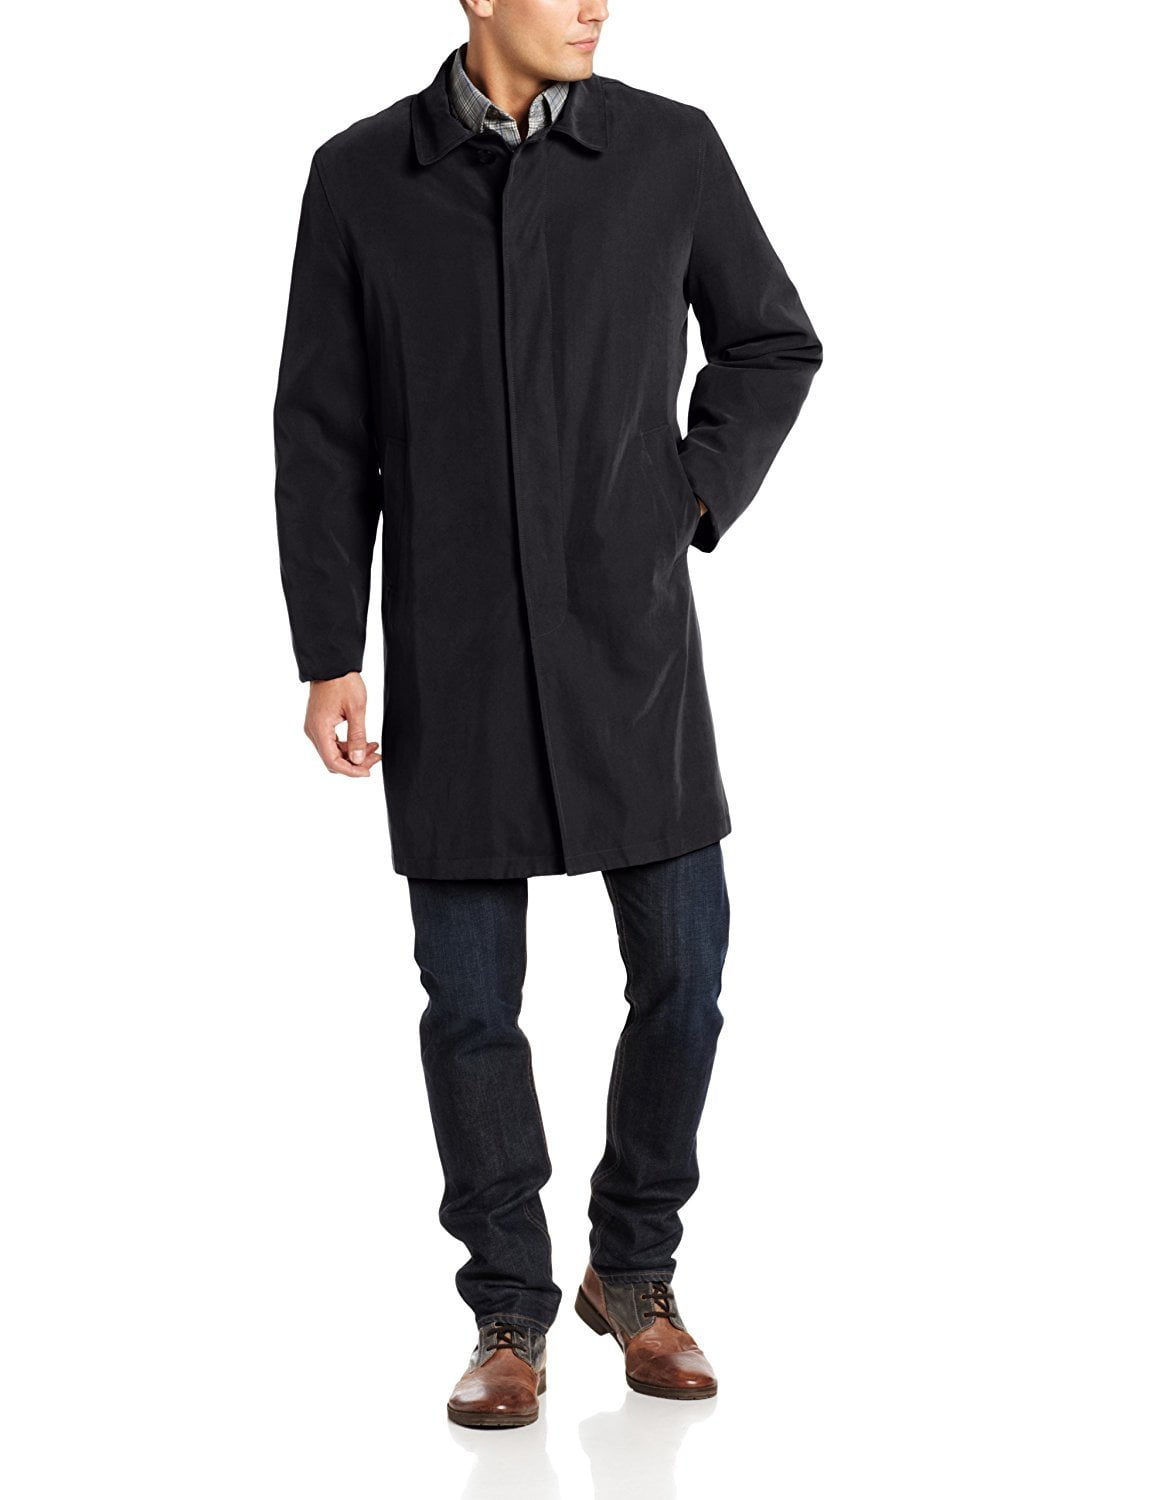 London Fog Men's Durham Rain Coat, Black, 42 Long - Walmart.com